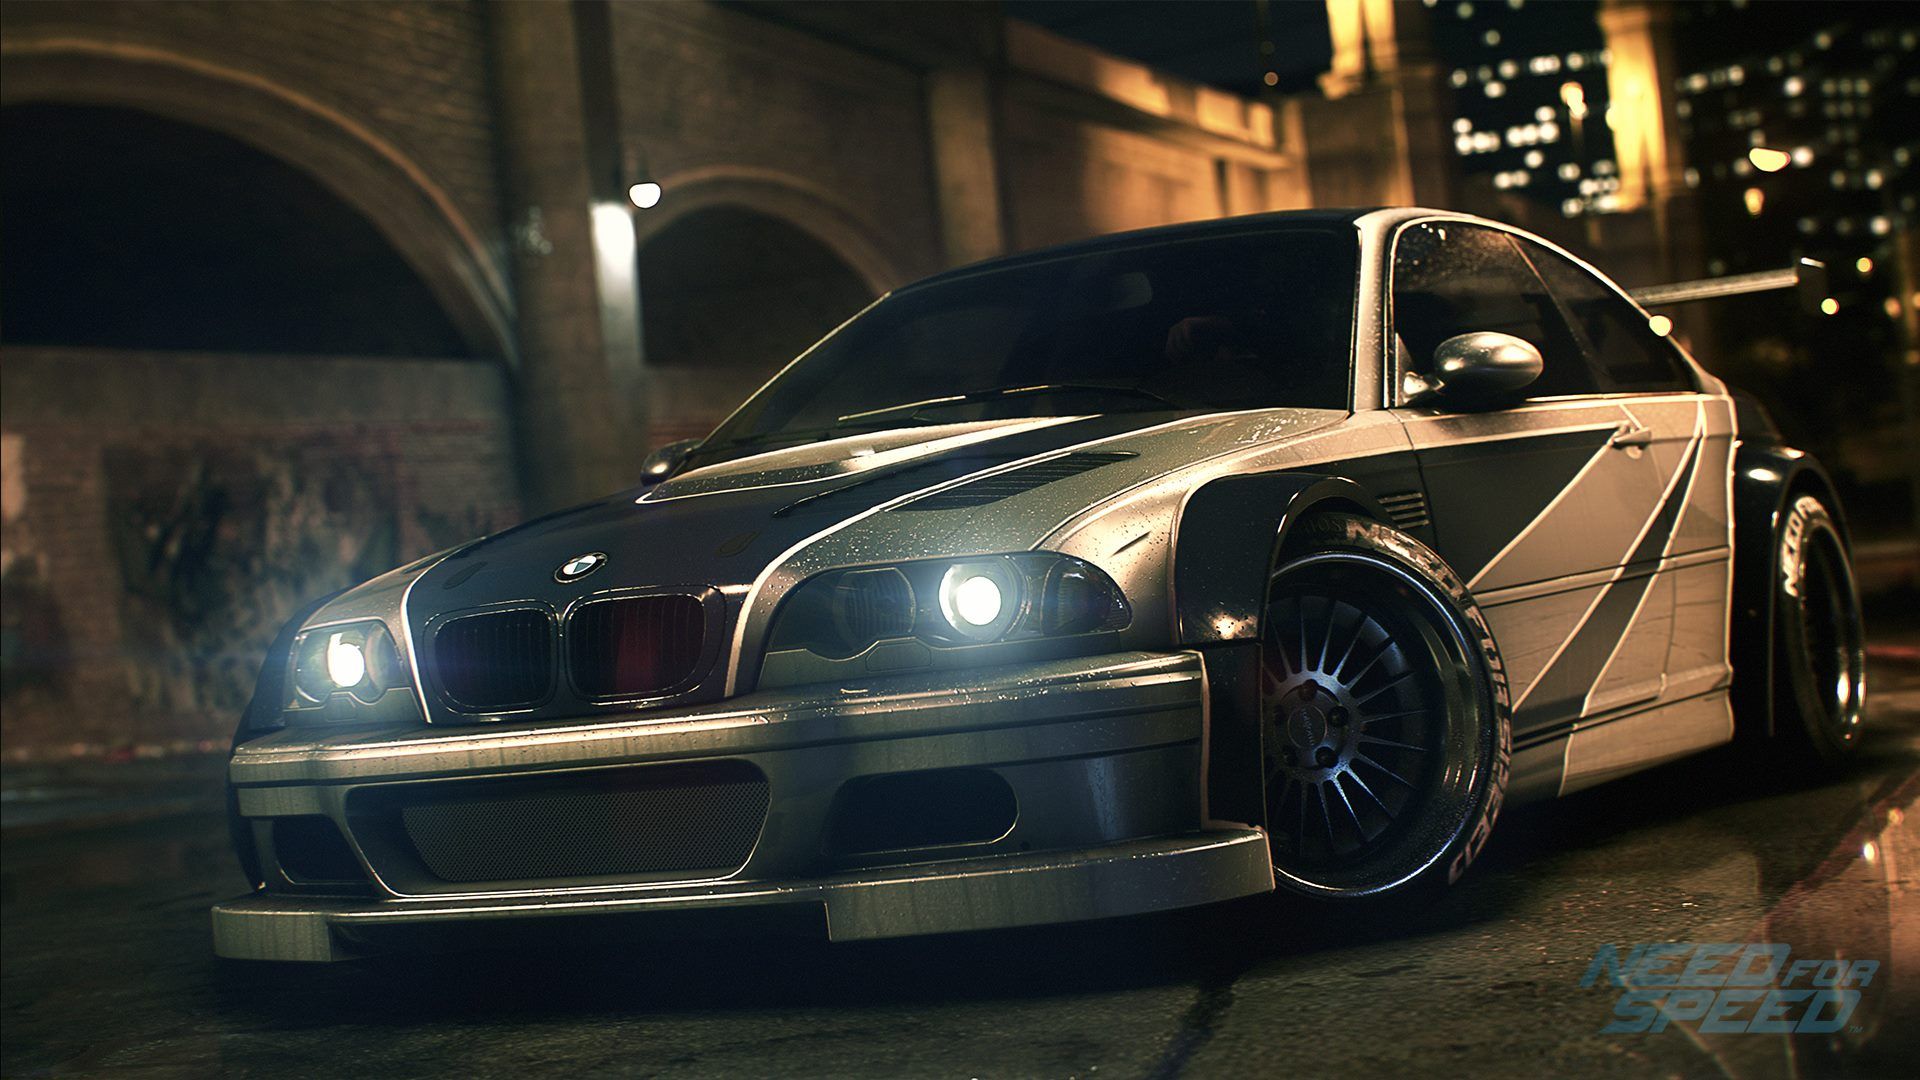 Полностью прошел Need For Speed Most Wanted и вернул свою BMW